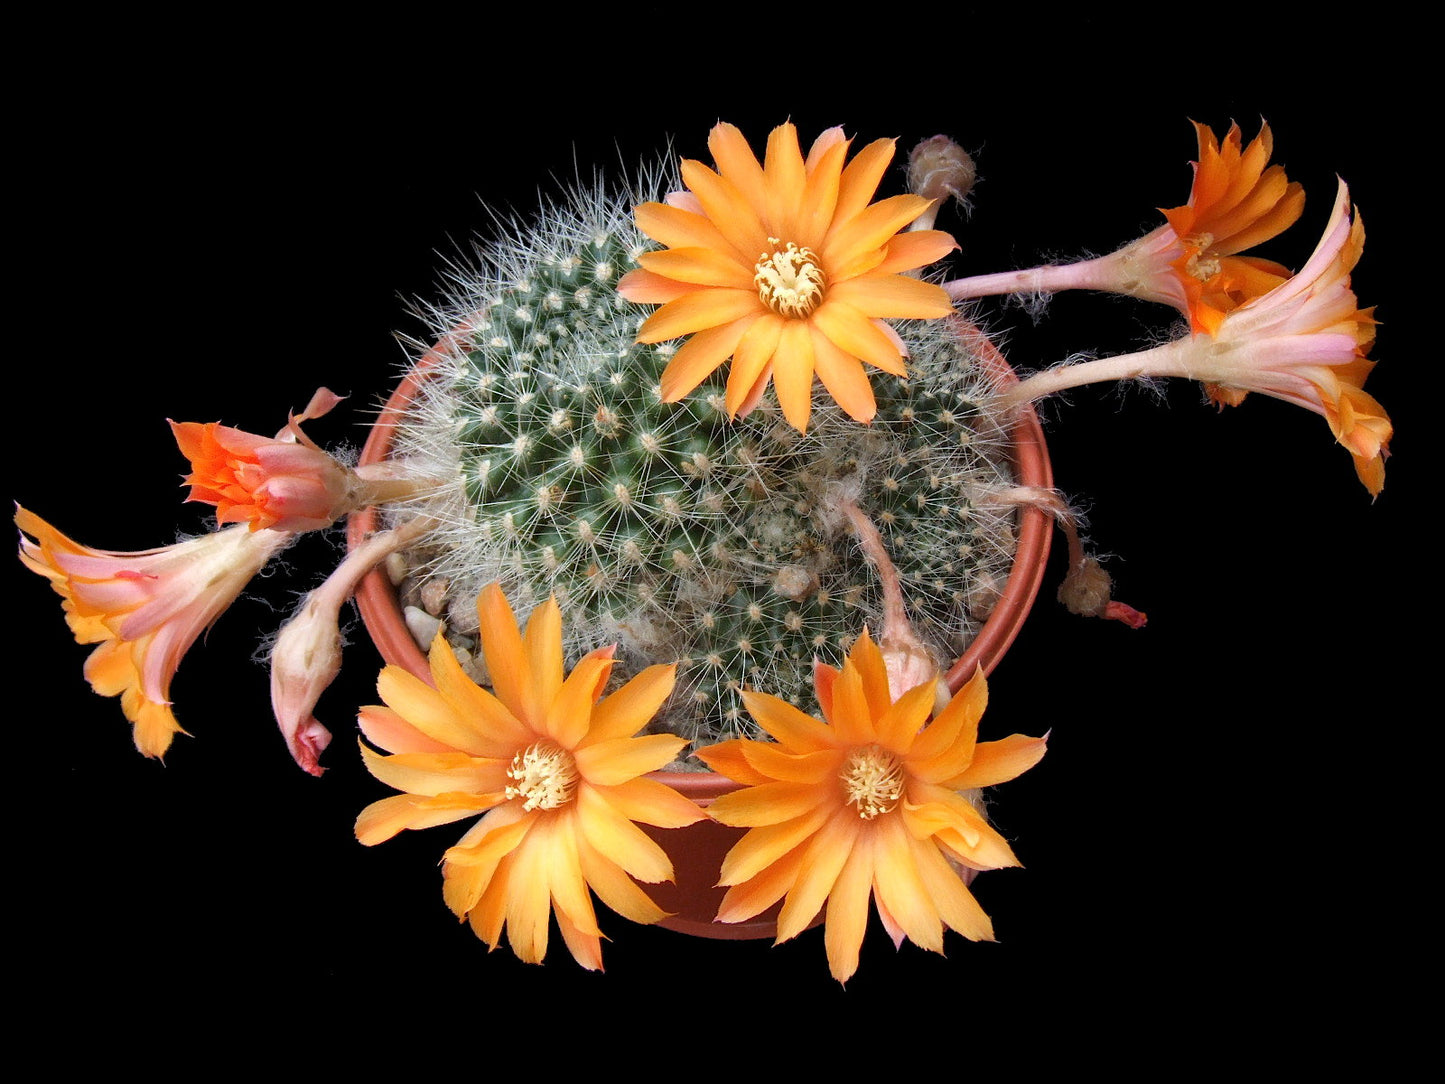 Cactus - Rebutia flavistyla Seeds